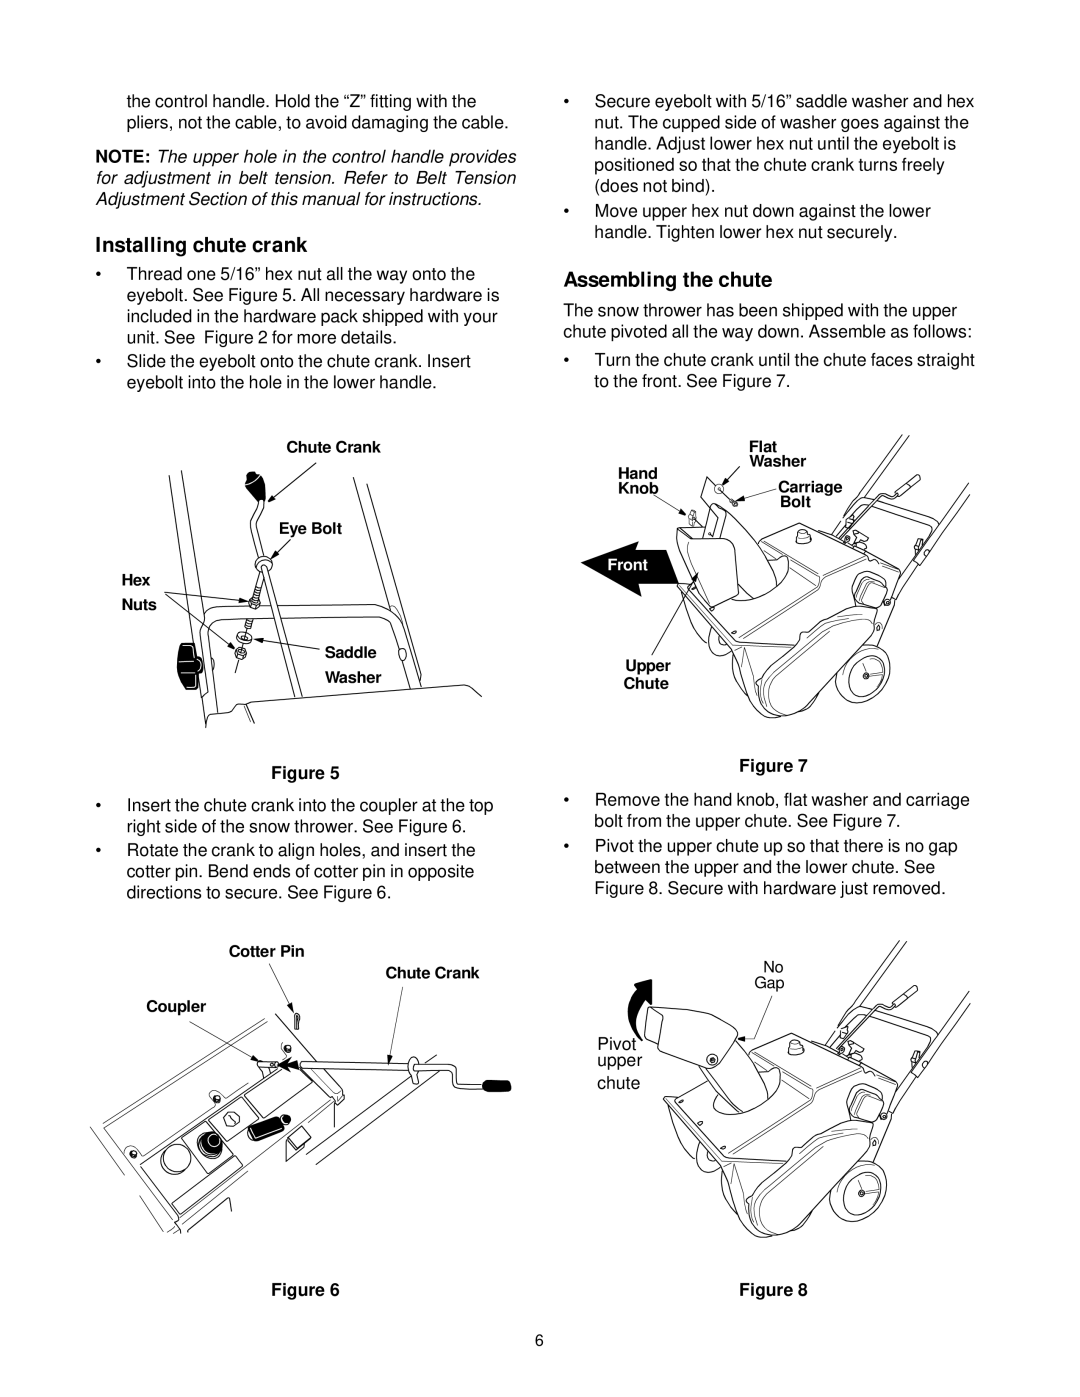 White Outdoor SB 45 manual Installing chute crank, Assembling the chute 